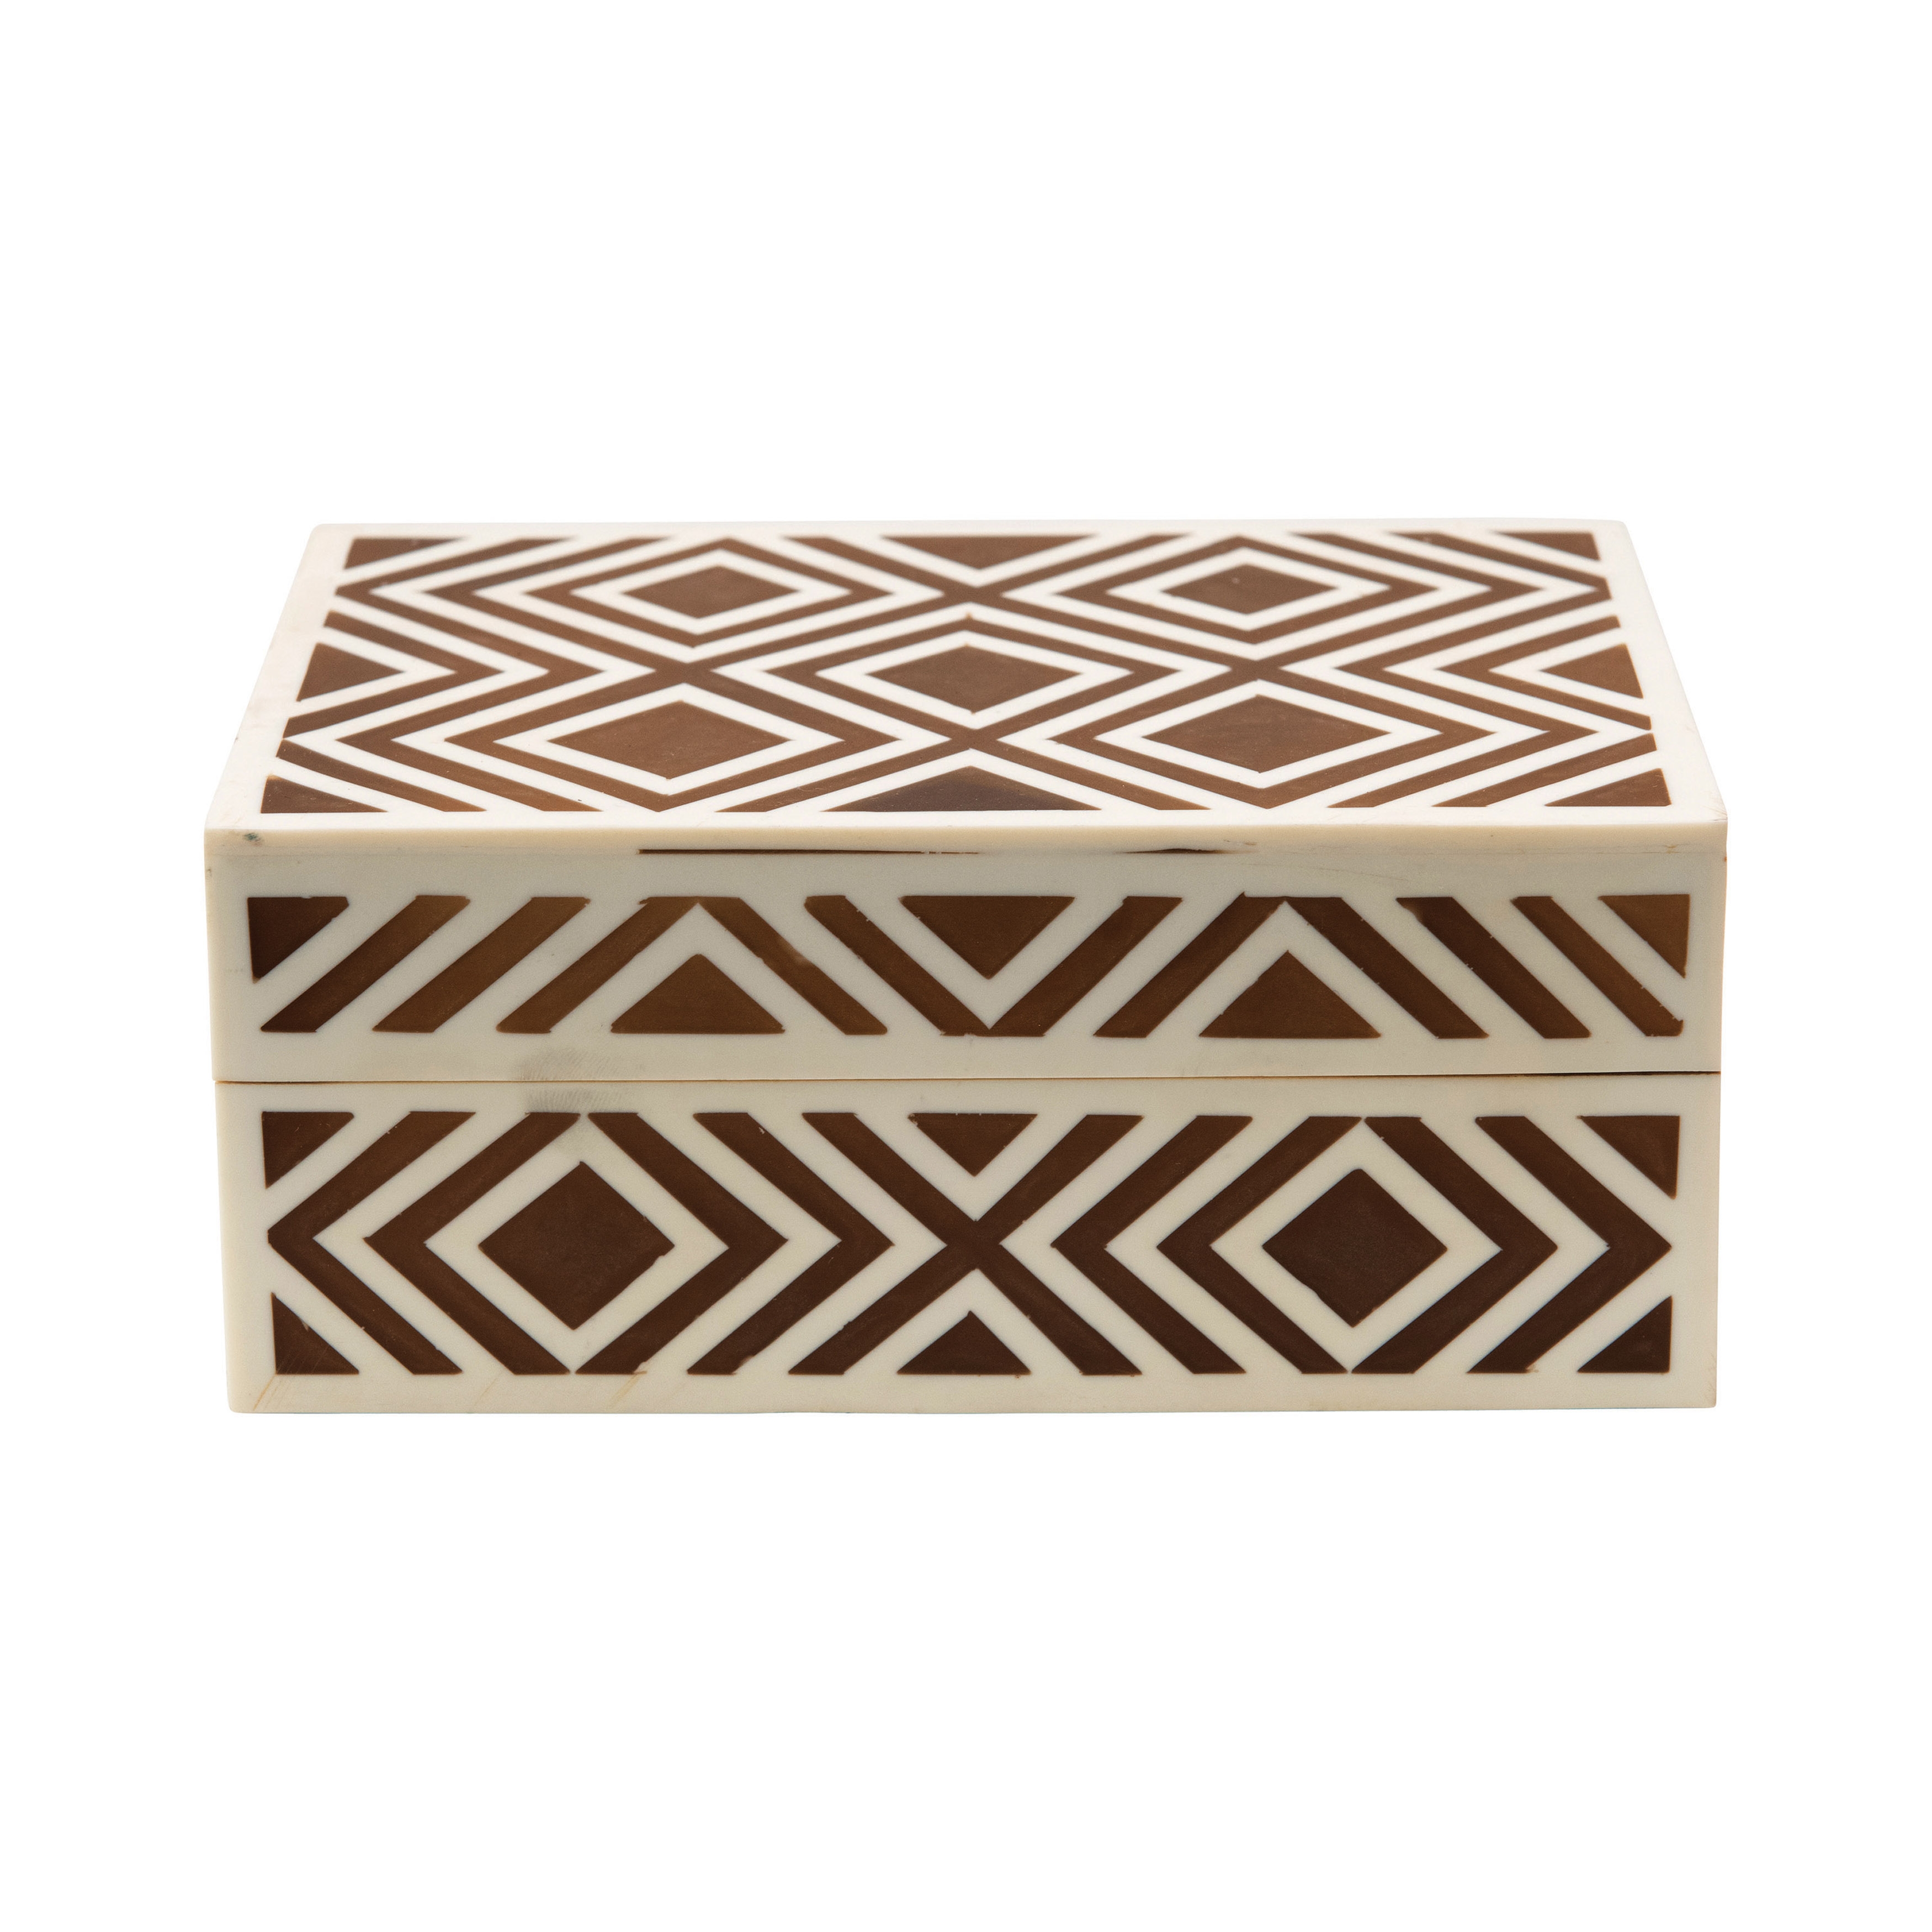 Pattern Inlay Decorative Box, Brown & Cream - Image 0